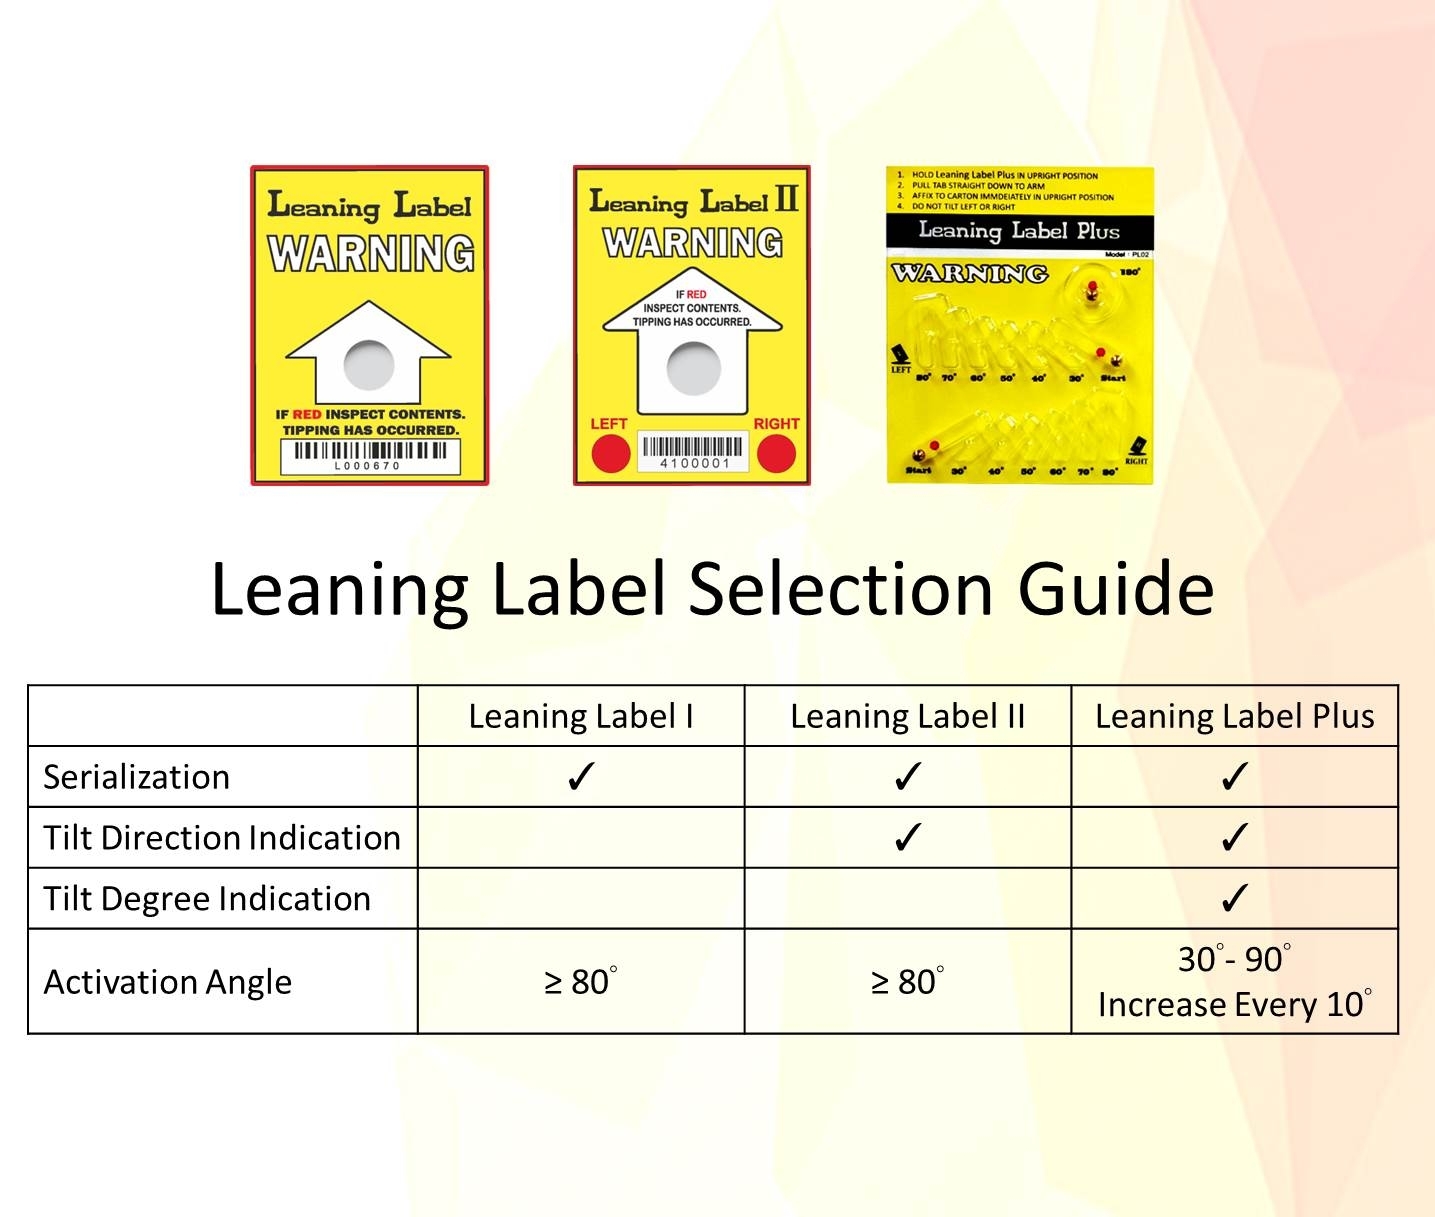 Leaning Label II (Tilt Indicator)